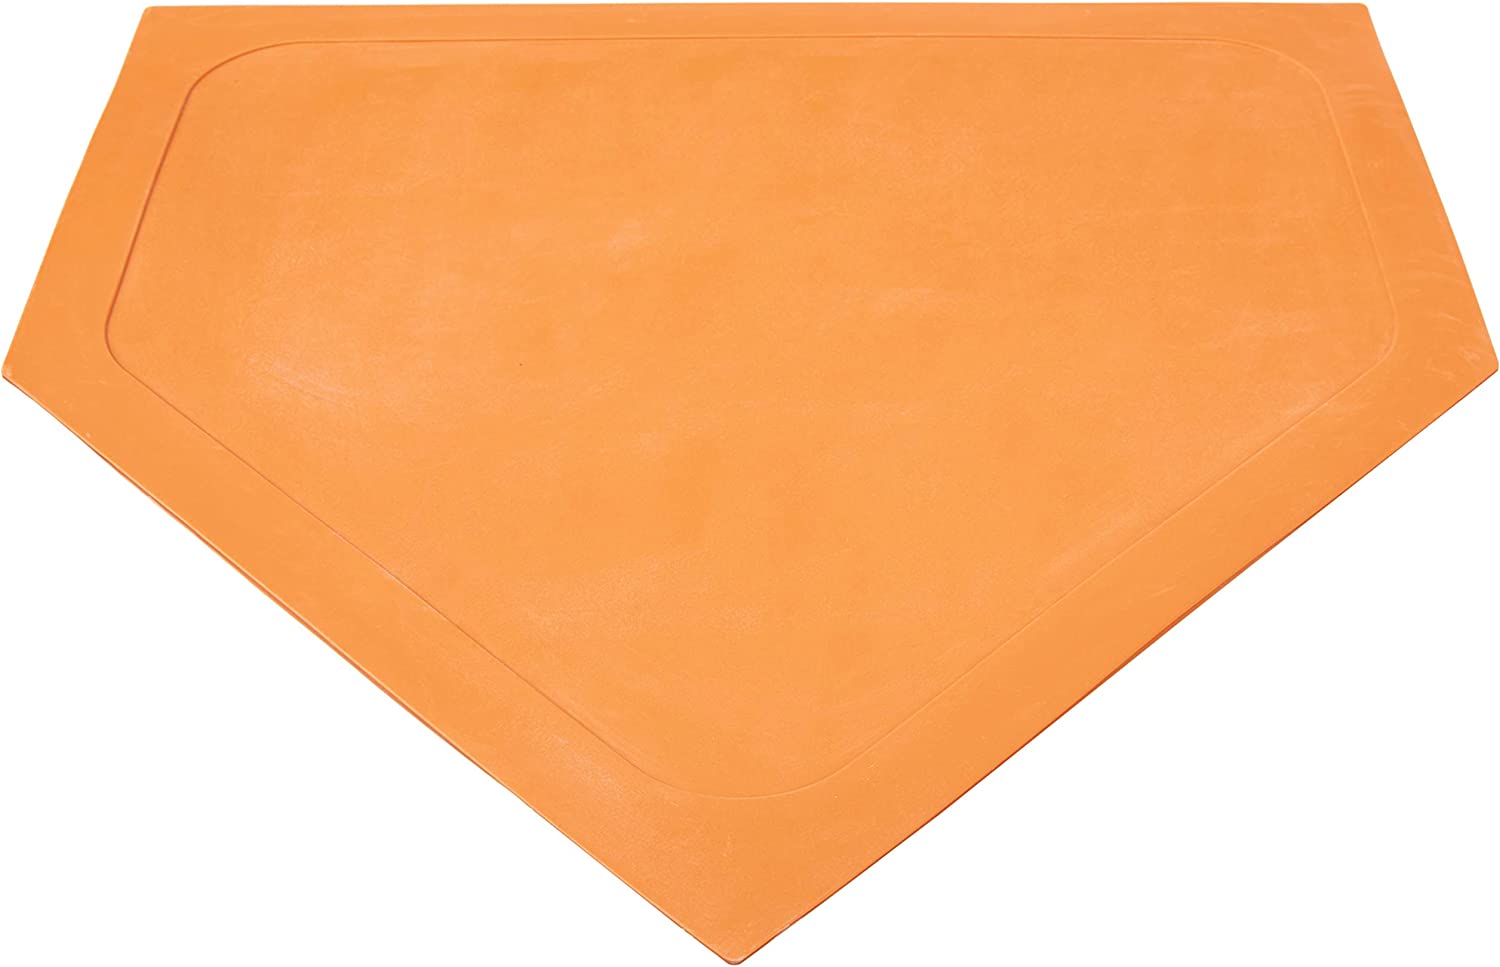 Rubber Softball Baseball Base Set Home And Pitchers Mound Orange Color Baseball Plate